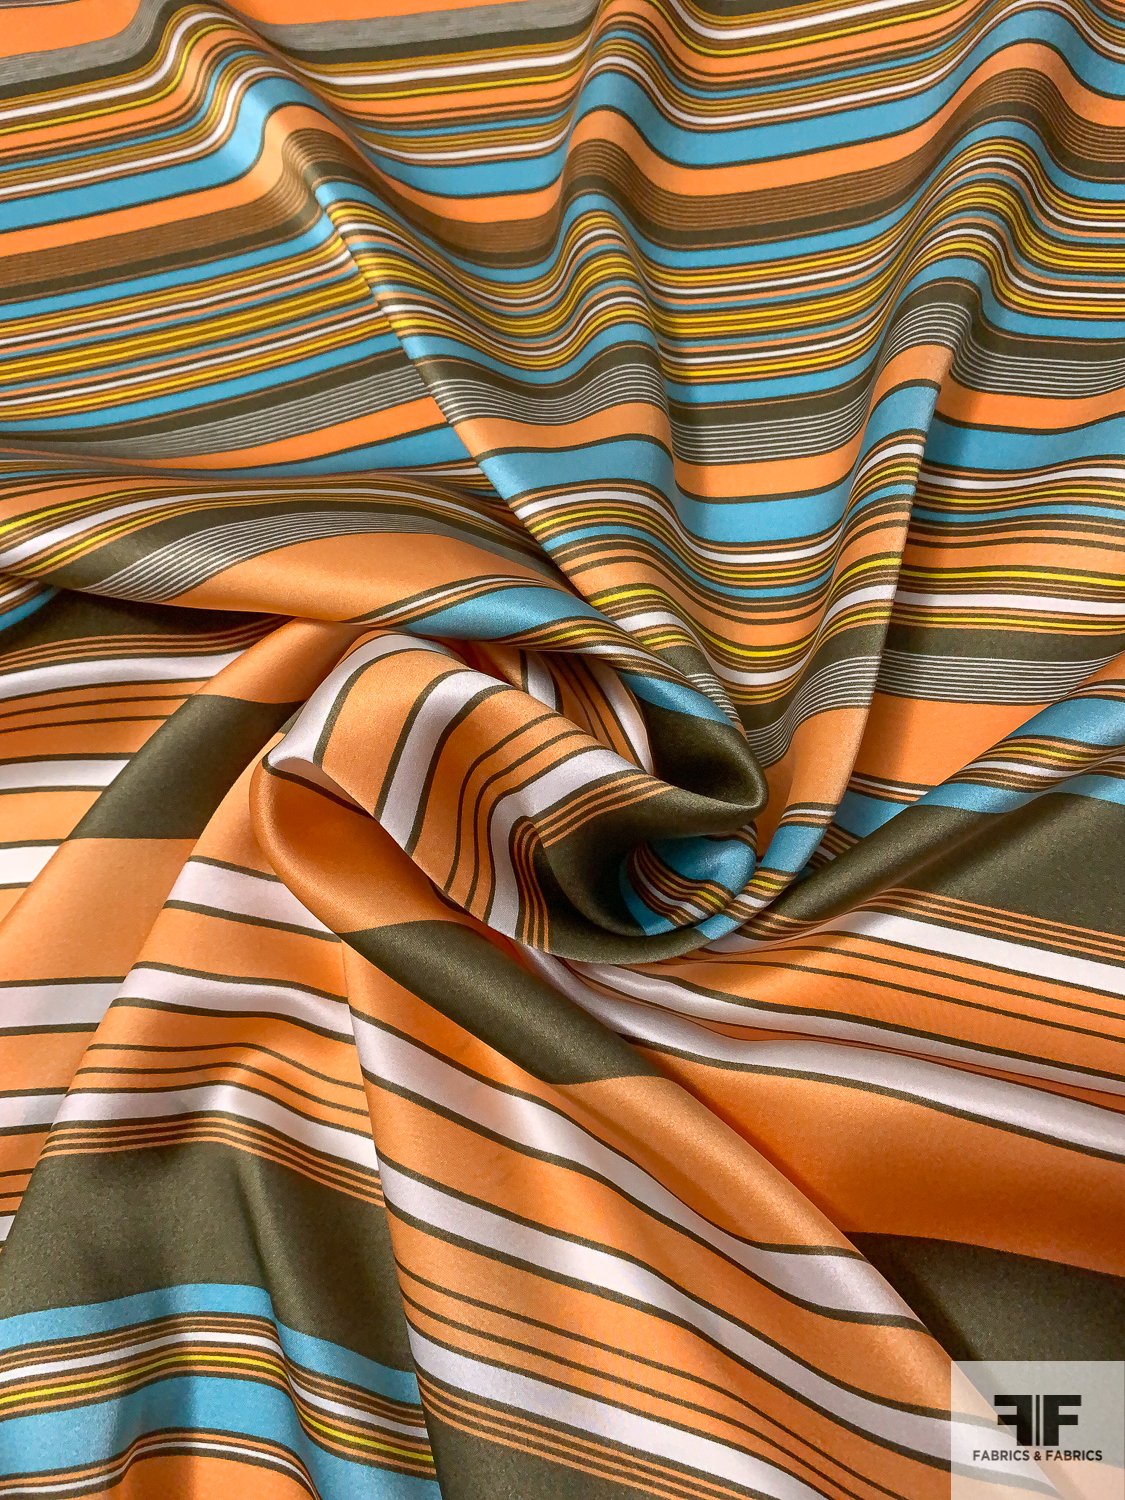 Horizontal Striped Printed Silk Charmeuse - Olive / Peachy-Orange / Ocean Blue / White